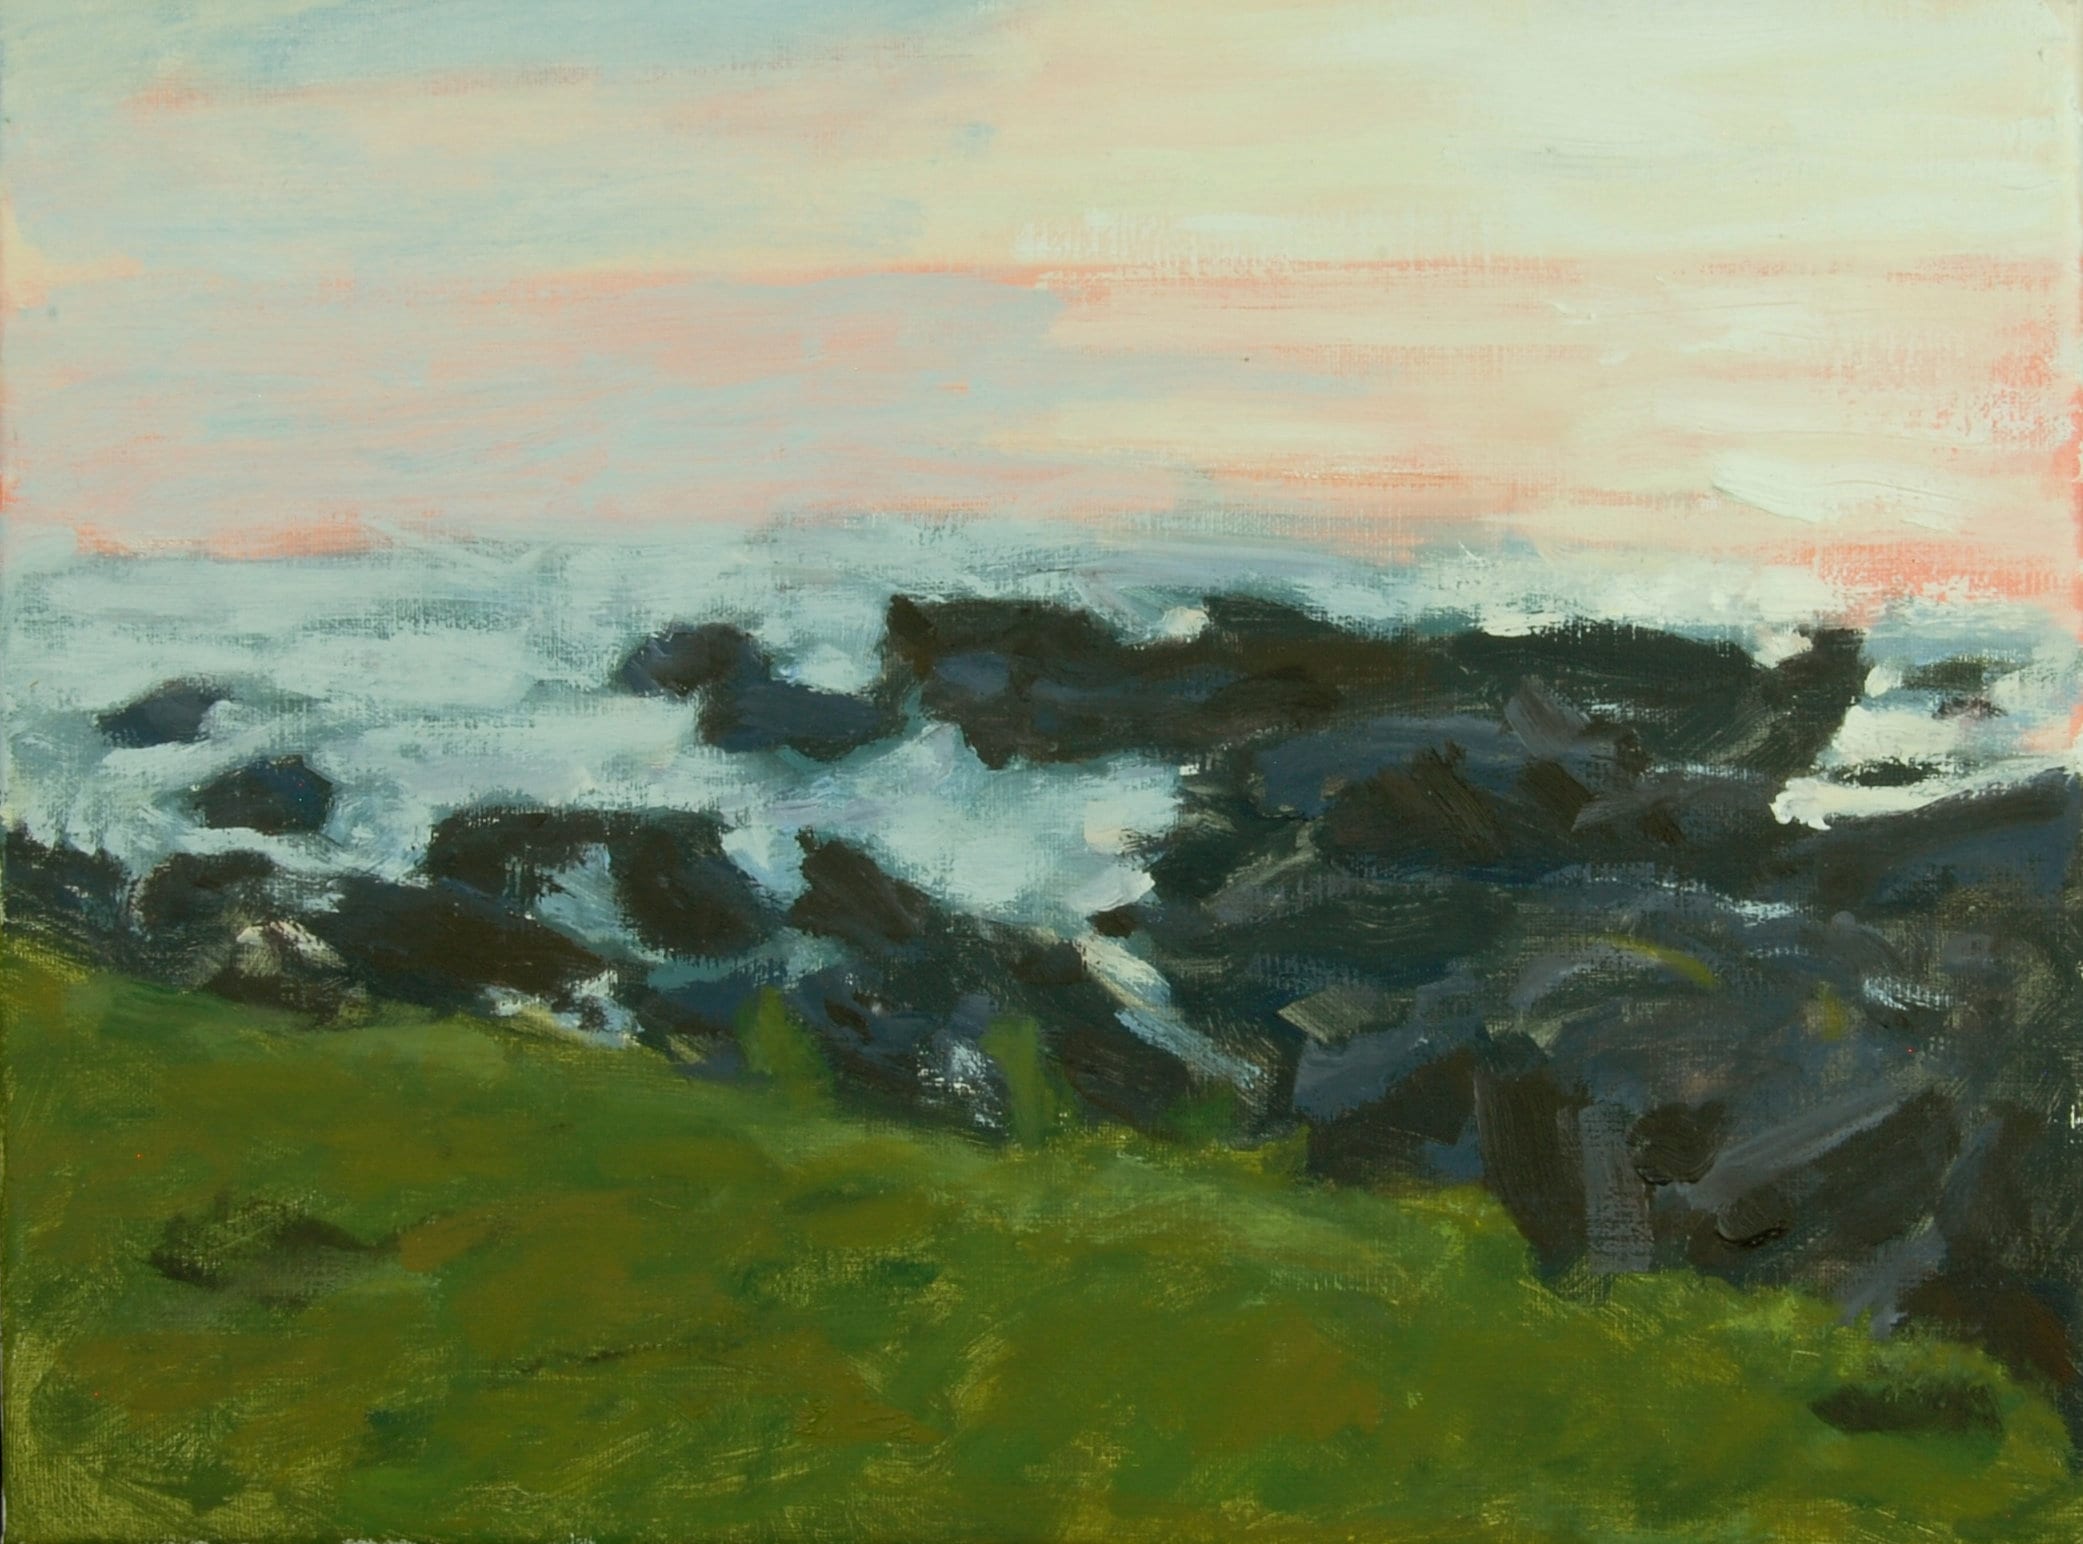 Seascape Maine Coast by Robert Lafond Original Oil Painting Acadia National Park